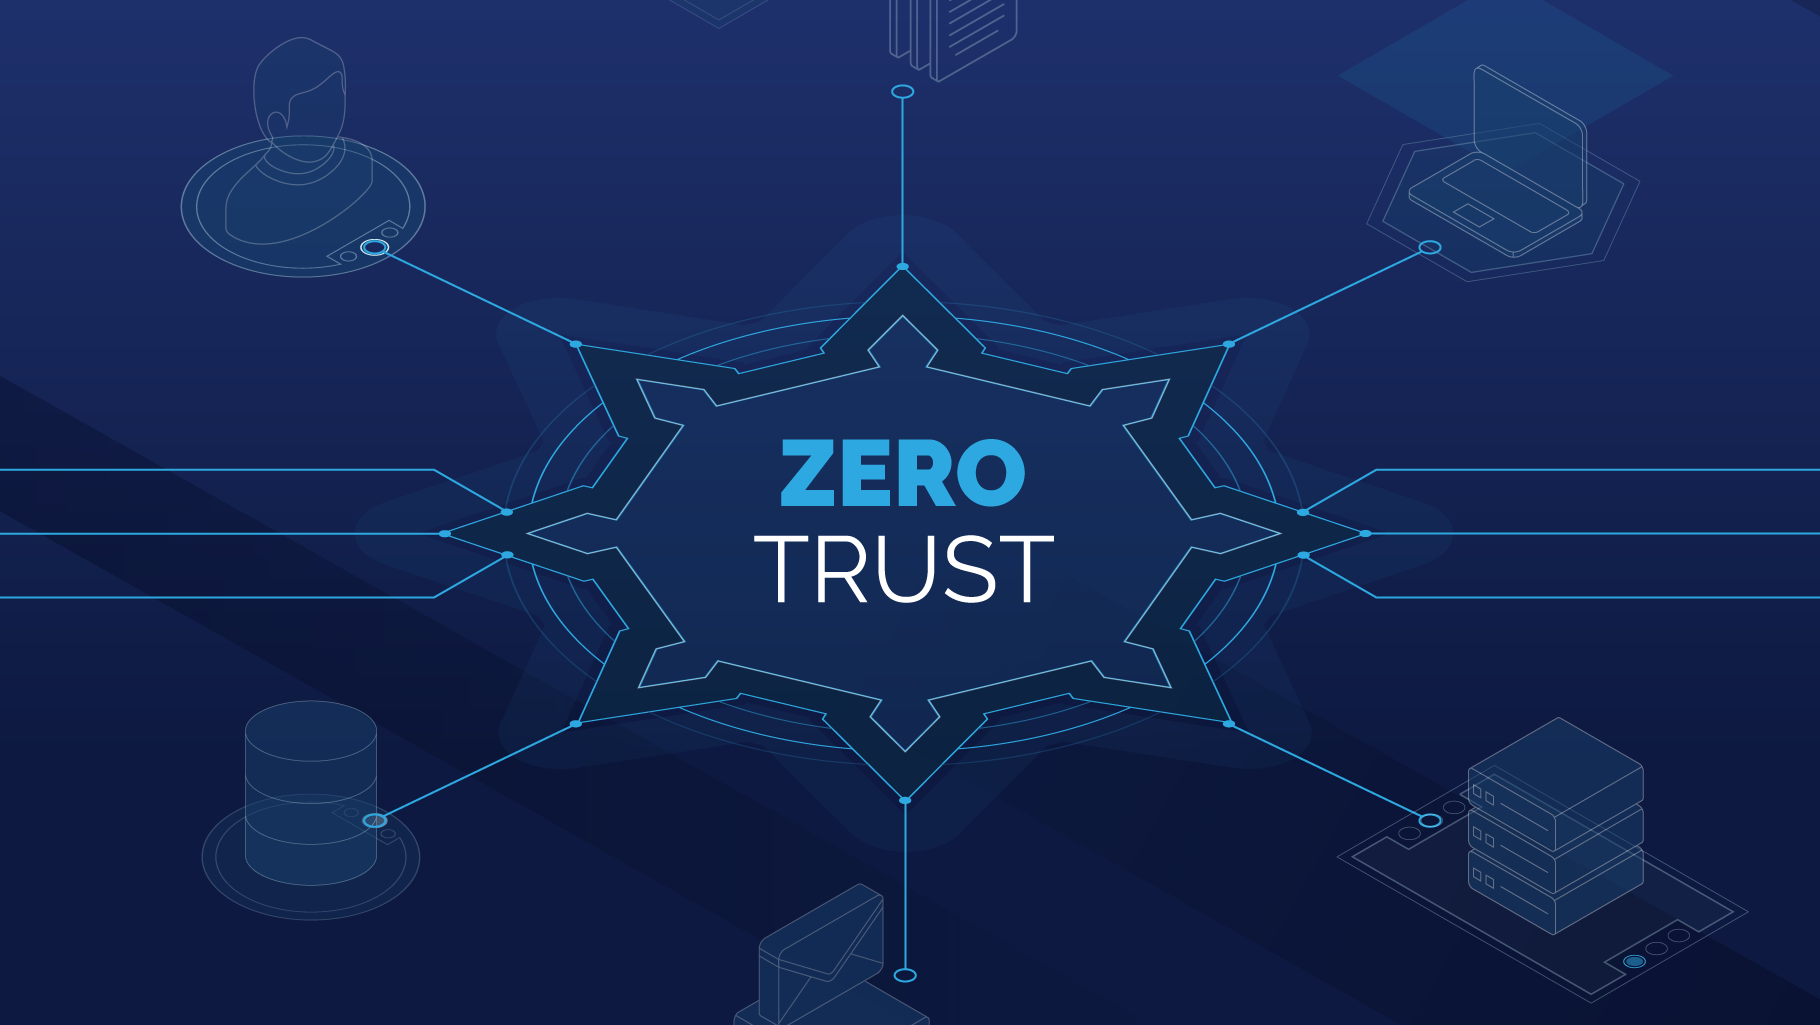 Zero Trust: Is it anything new?